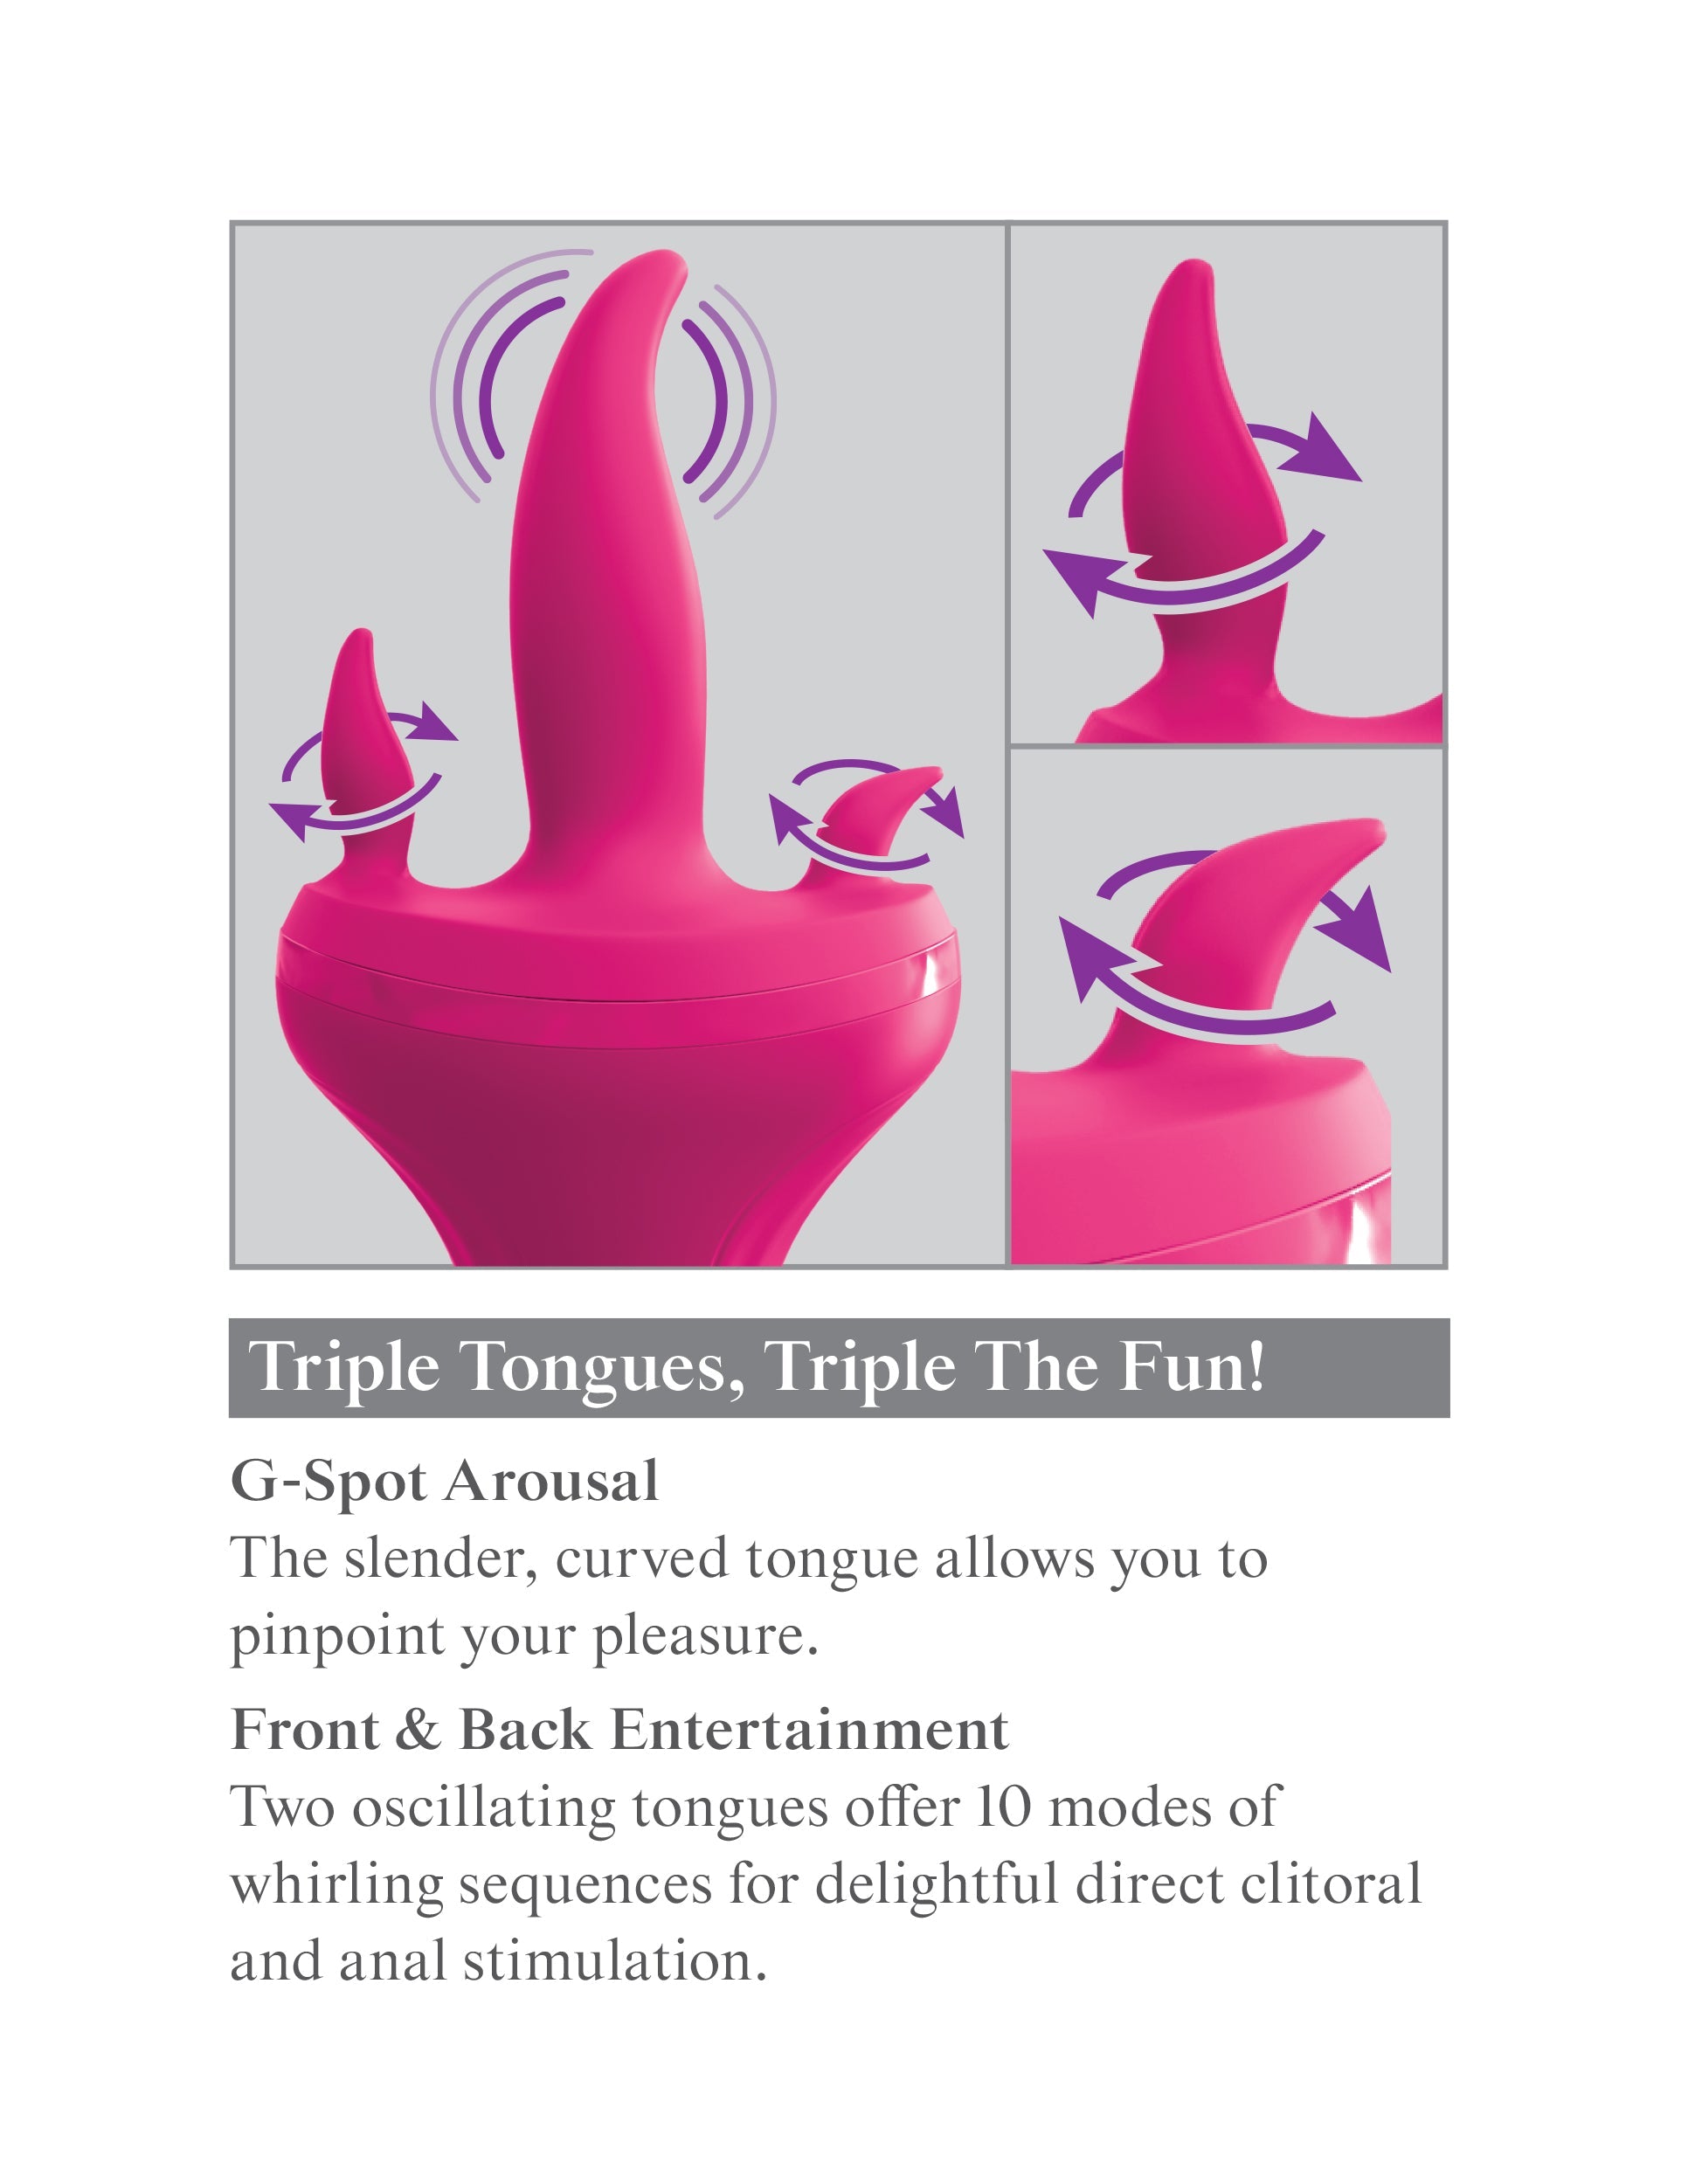 Threesome Holey Trinity with 3 Way Pleasure Tongues